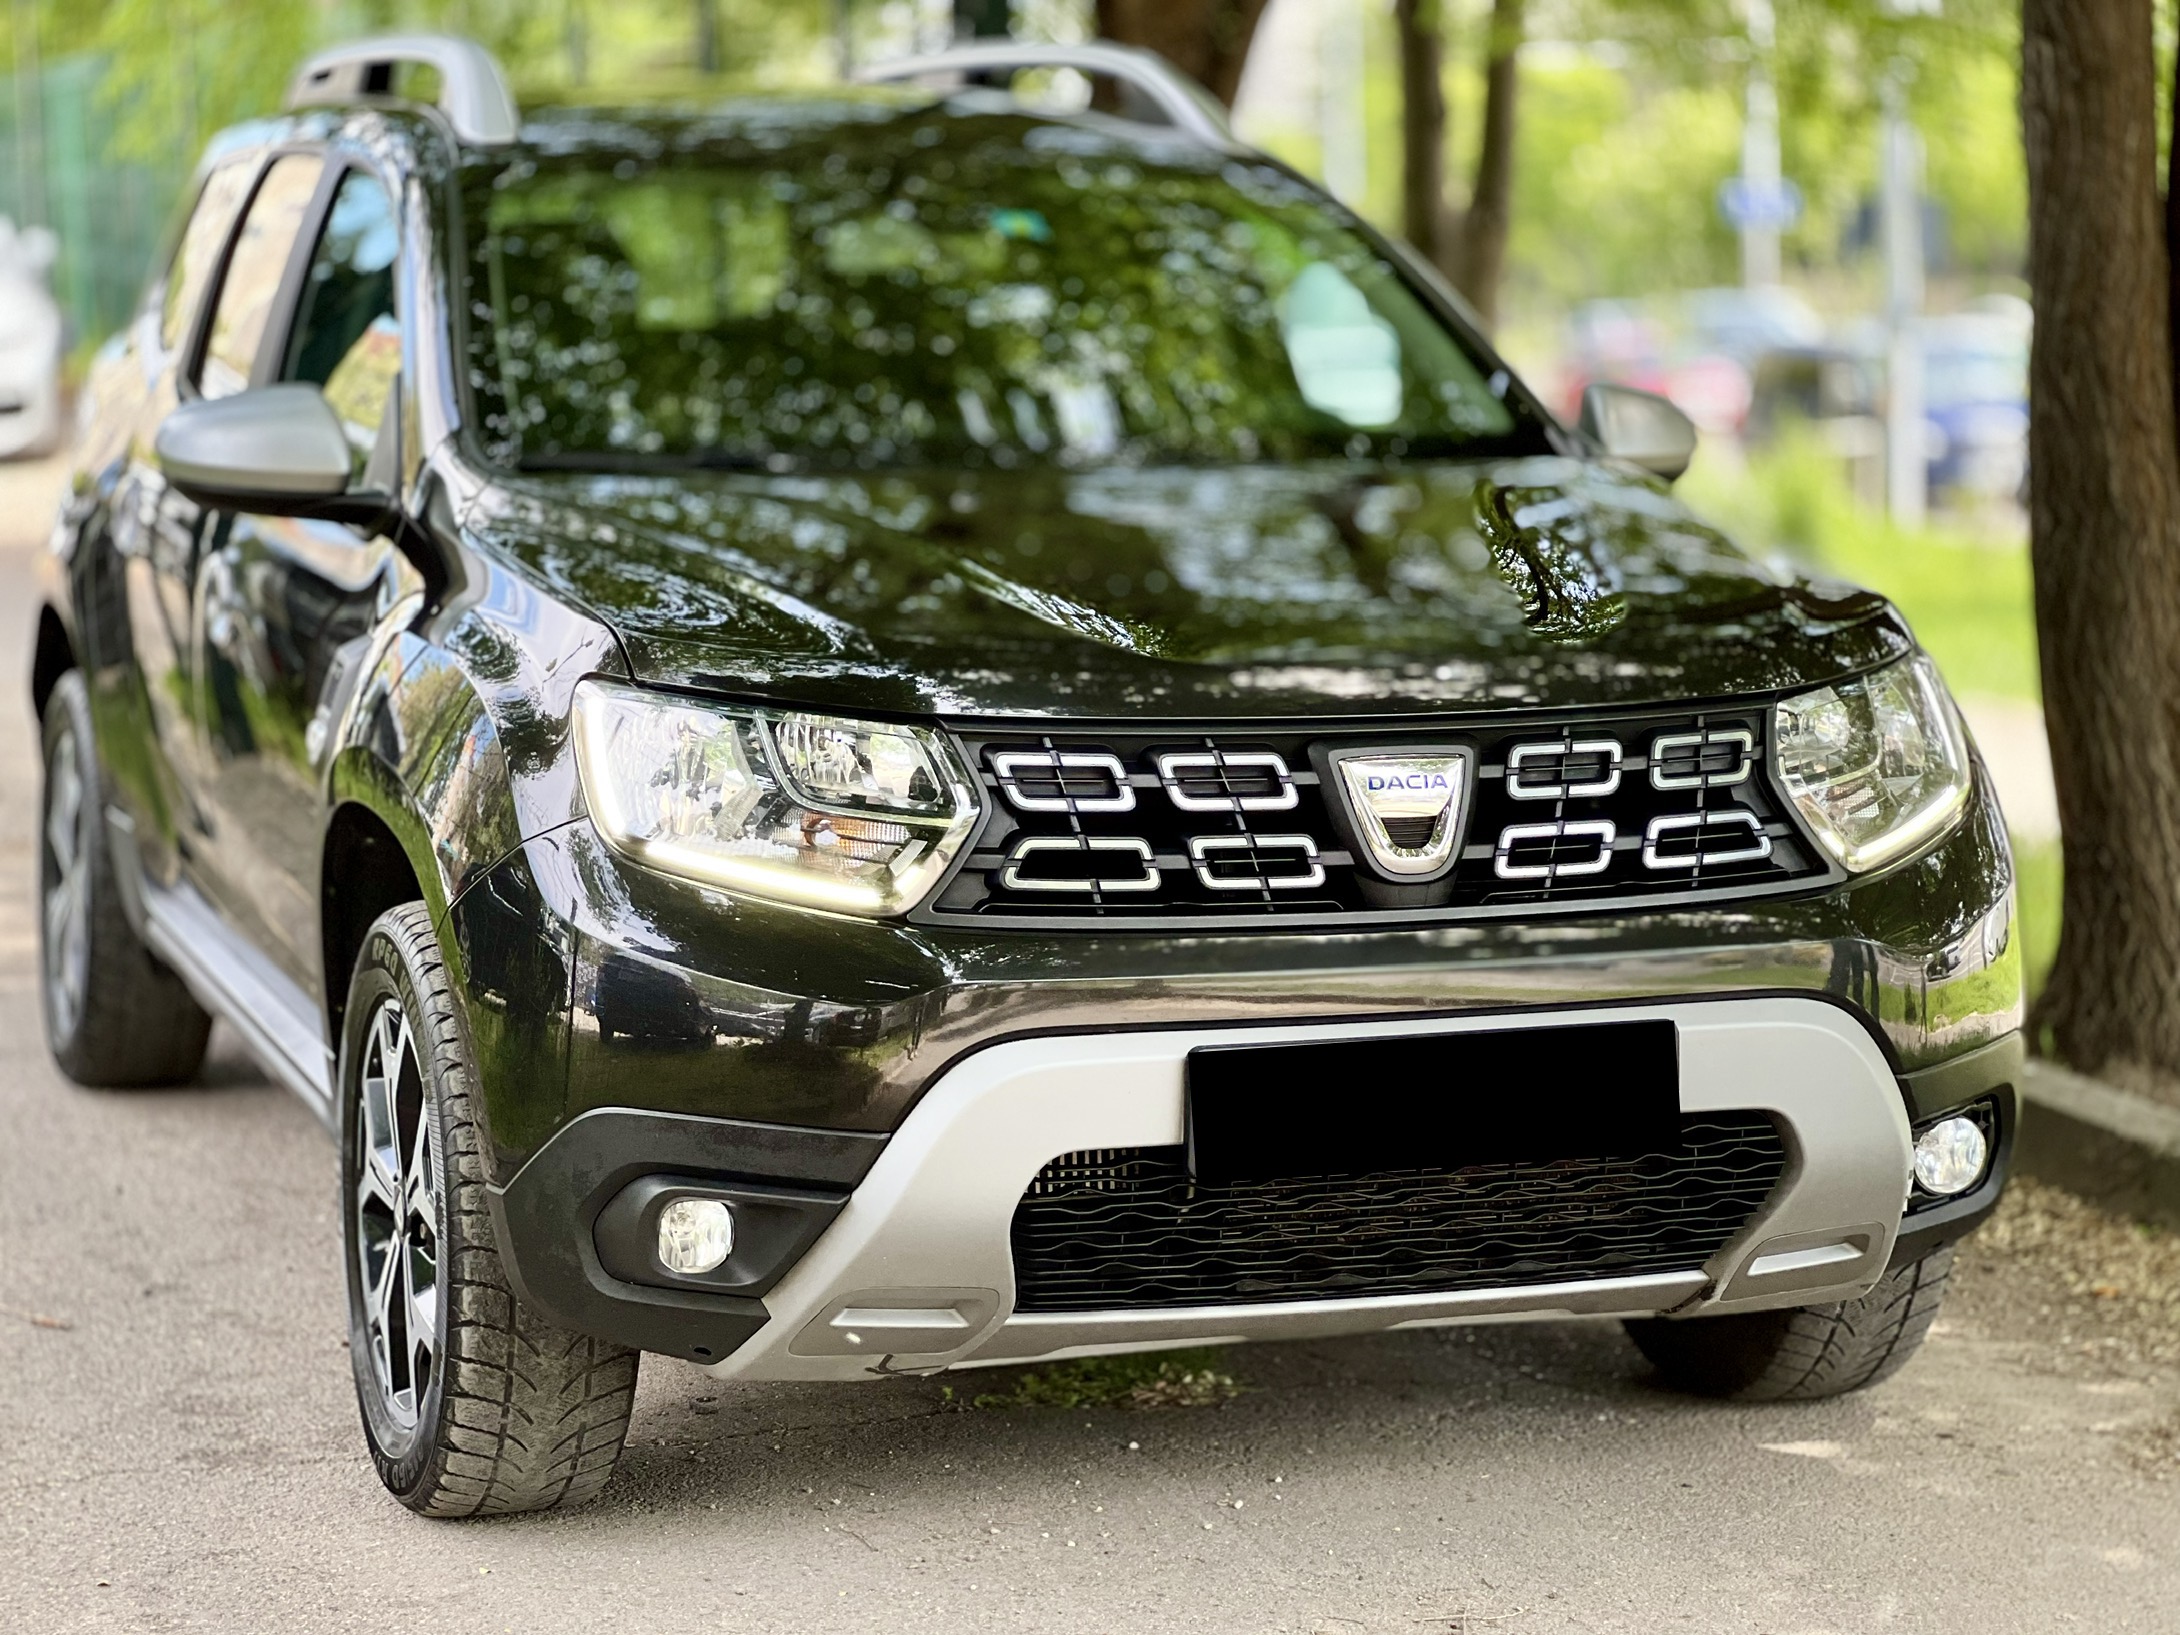 Dacia Duster 2019